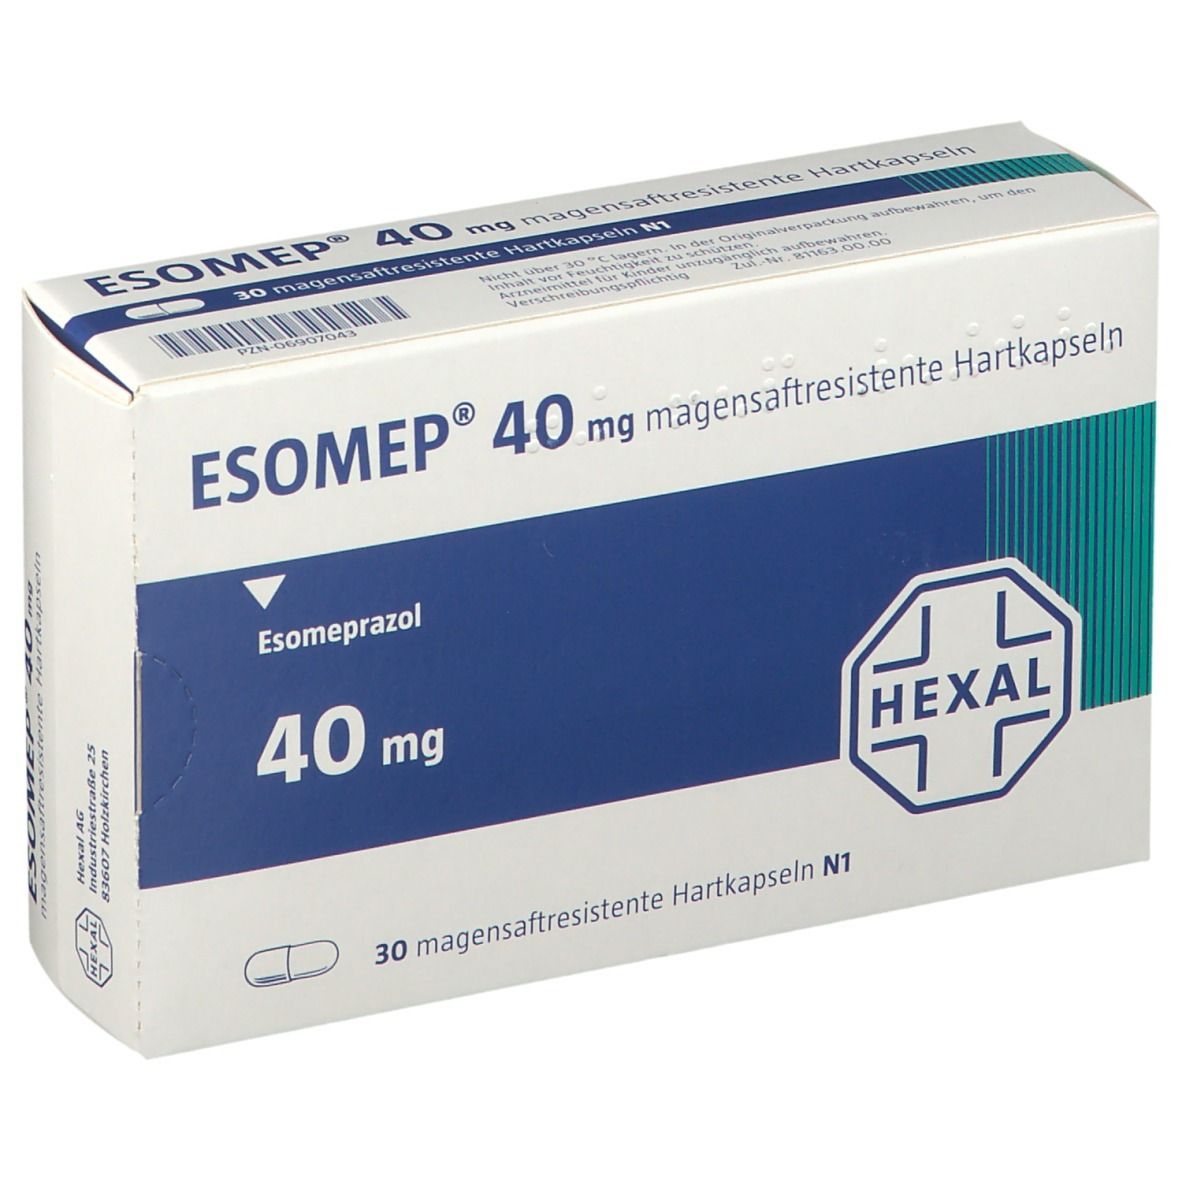 ESOMEP® 40 mg